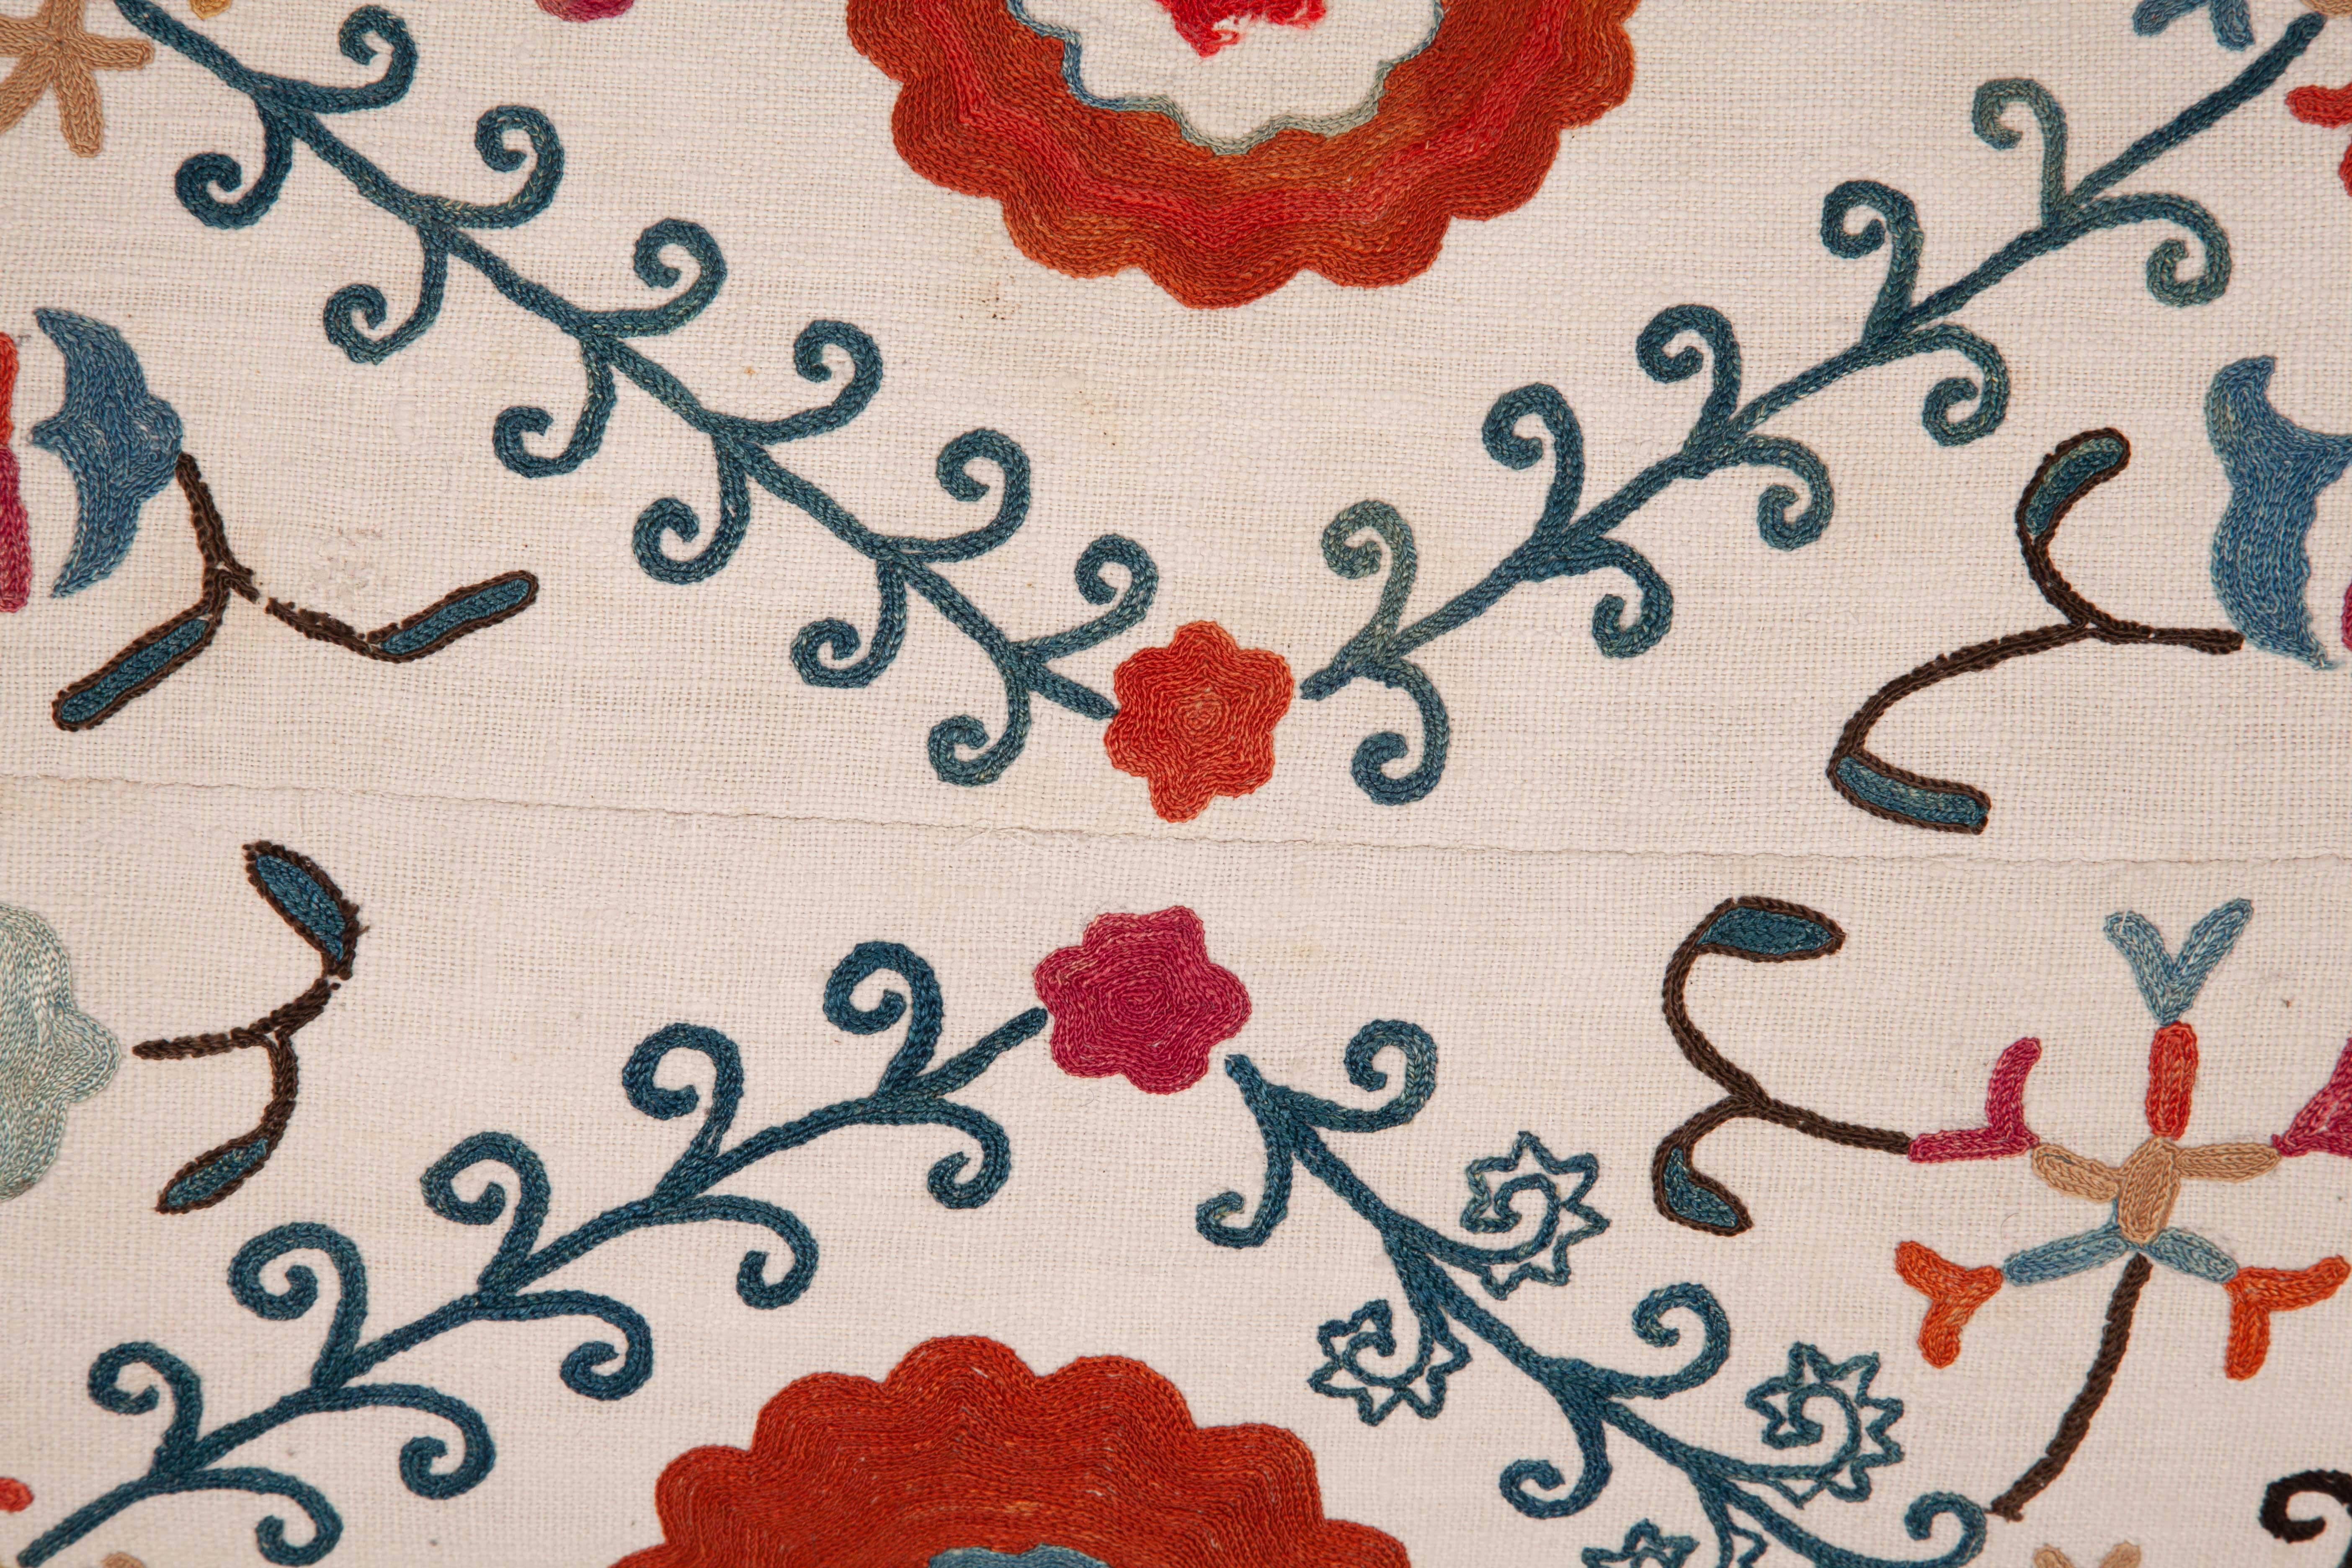 Uzbek Antique Suzani pillow Cases Fashioned from a Bukhara Suzani Fragment